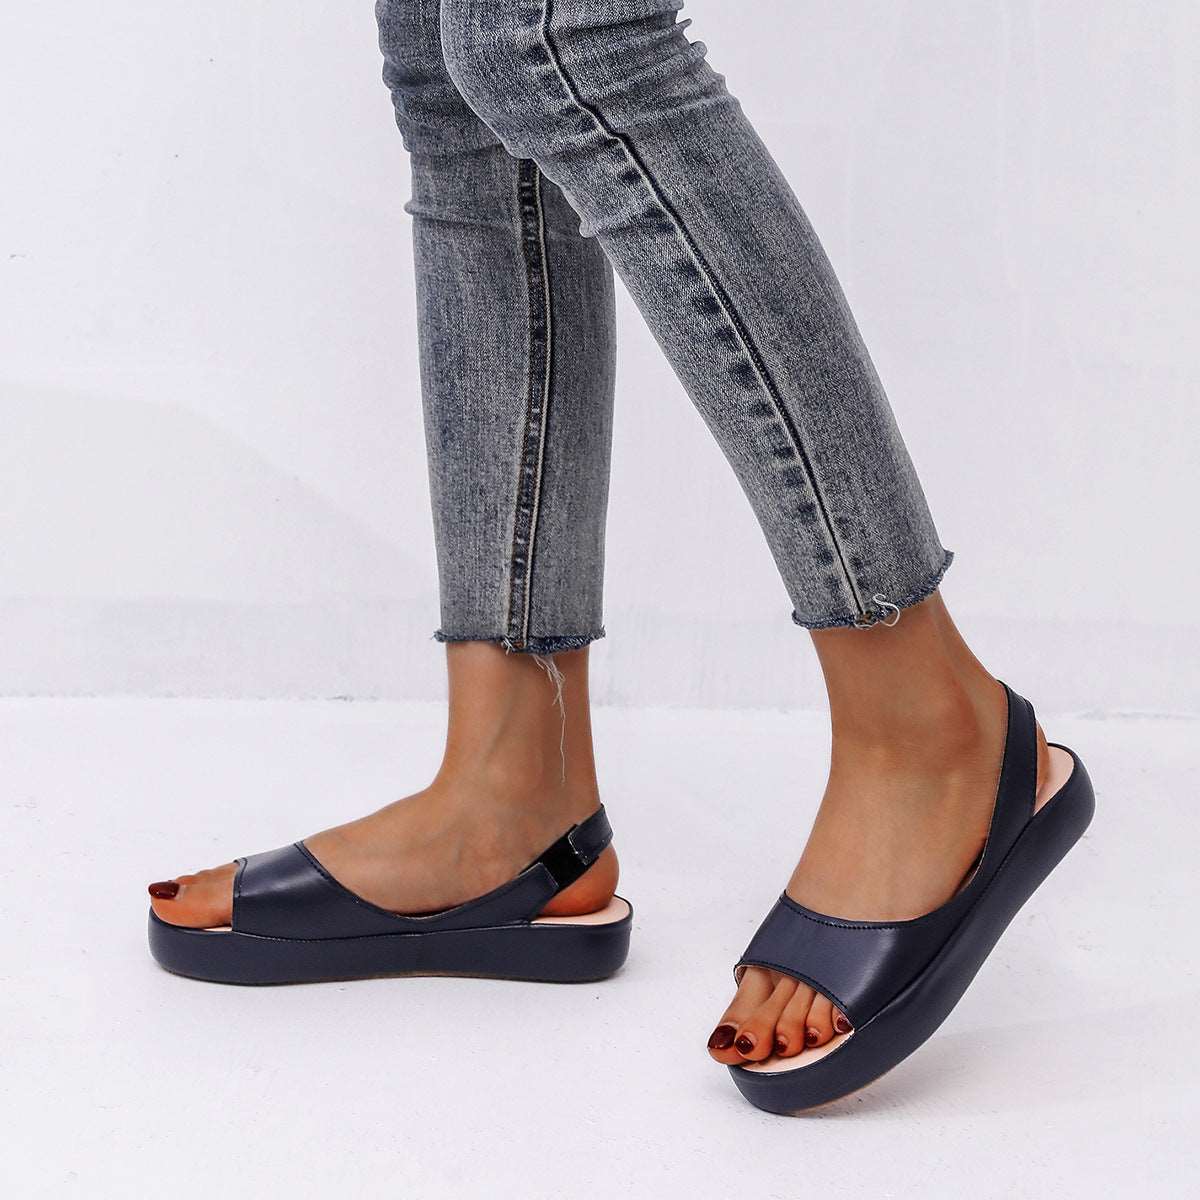 Women's Summer Flat Sandals With Back Strap Design